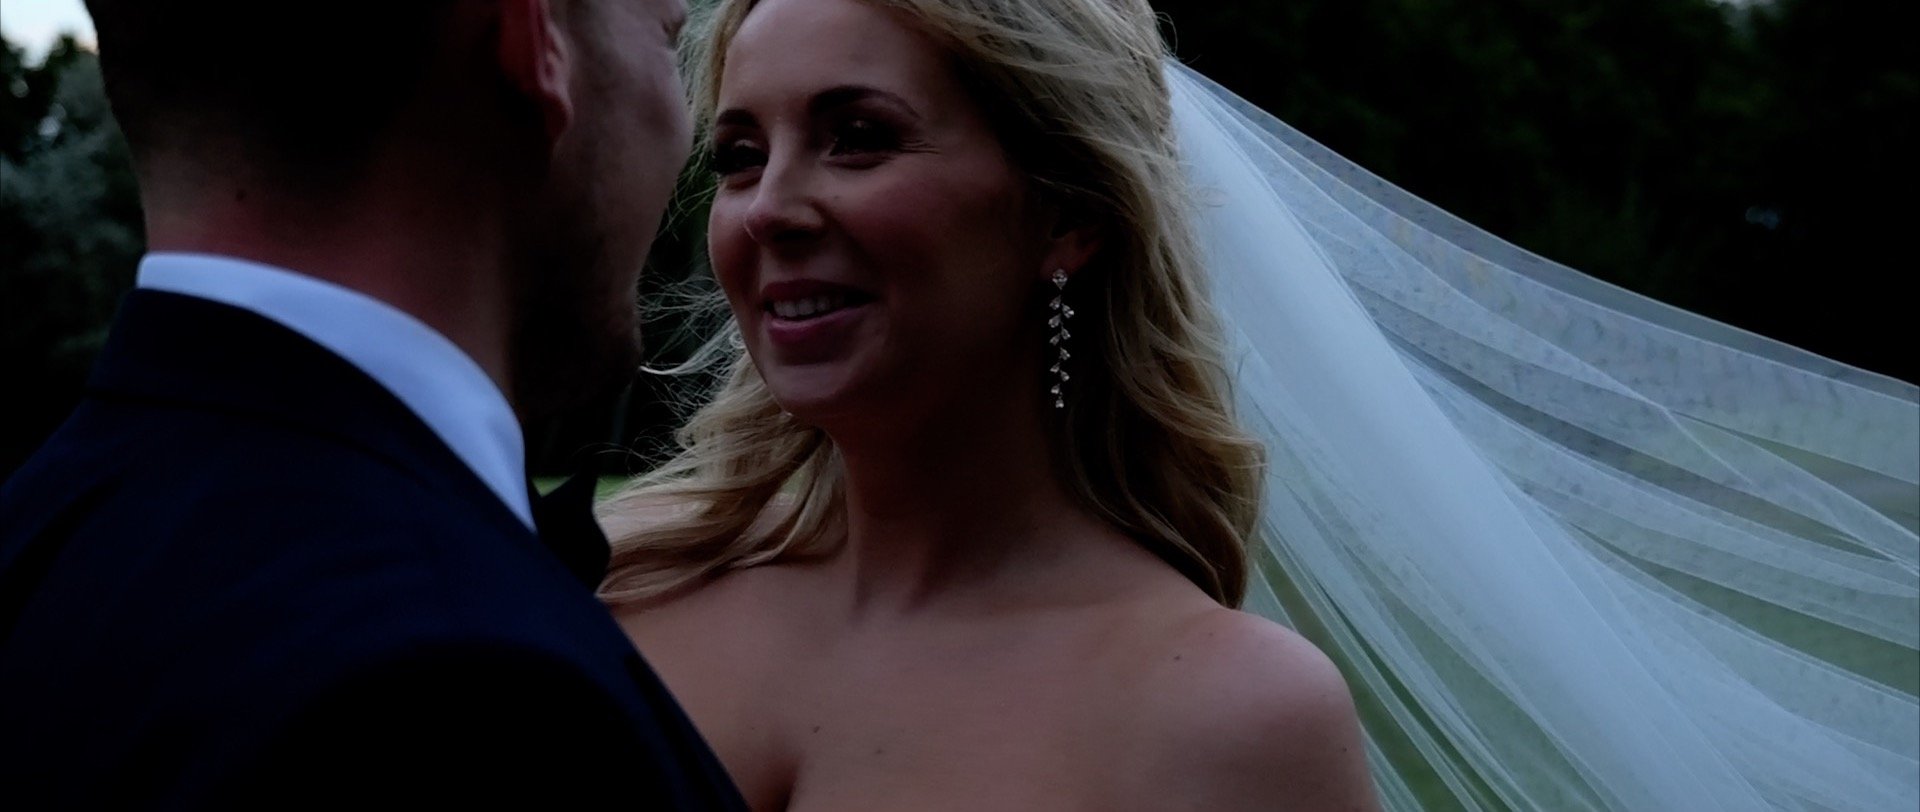 Crondon Park Wedding Videography - 3 Cheers Media - Stunning bride.jpg